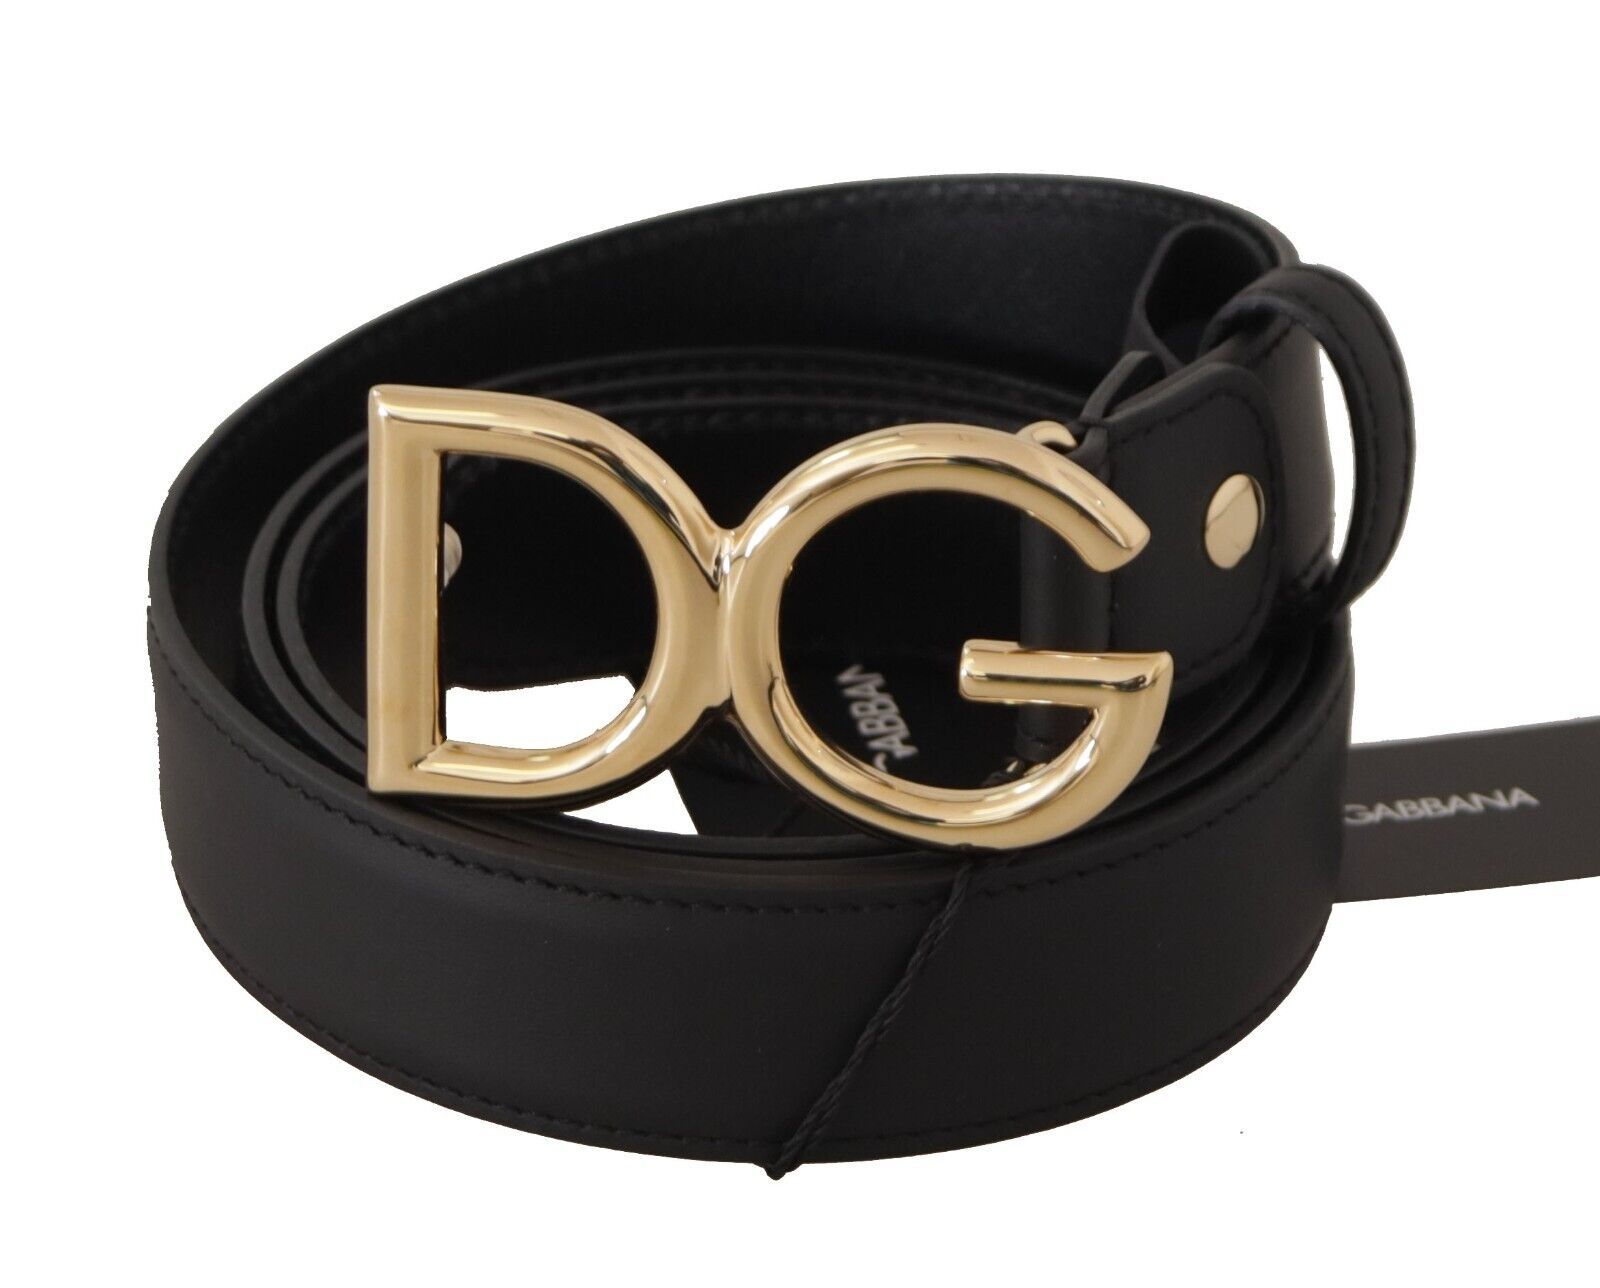 Black Dolce & Gabbana Elegant Black Leather Belt with Engraved Buckle 75 cm / 30 Inches